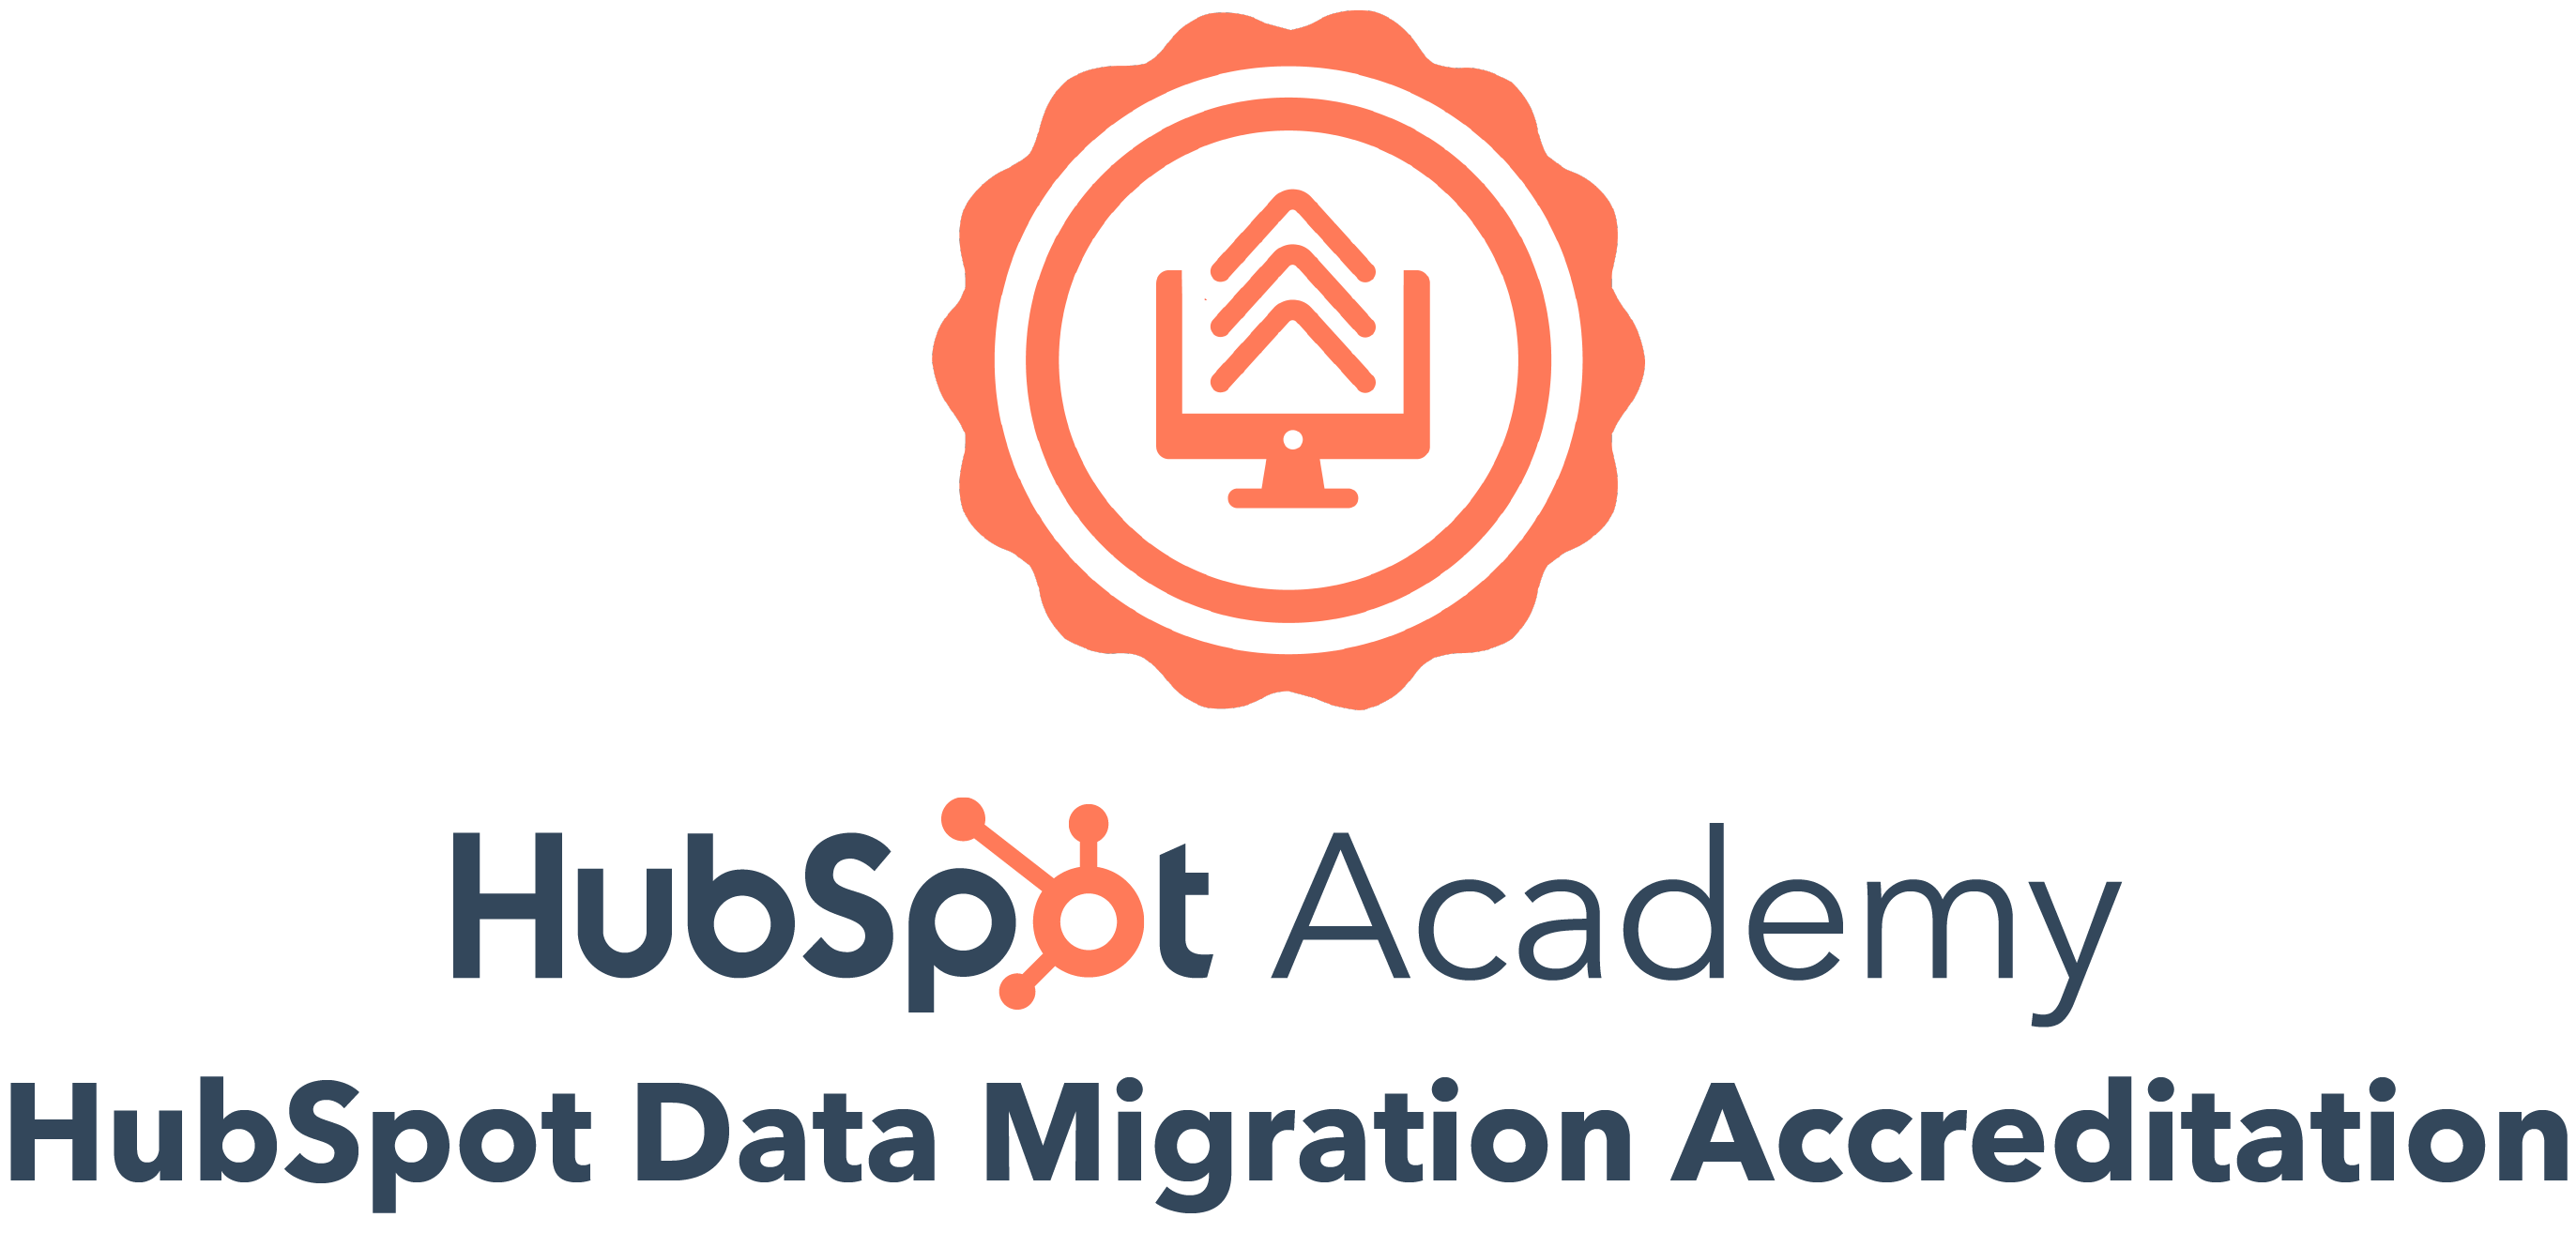 Data Migration Accreditation